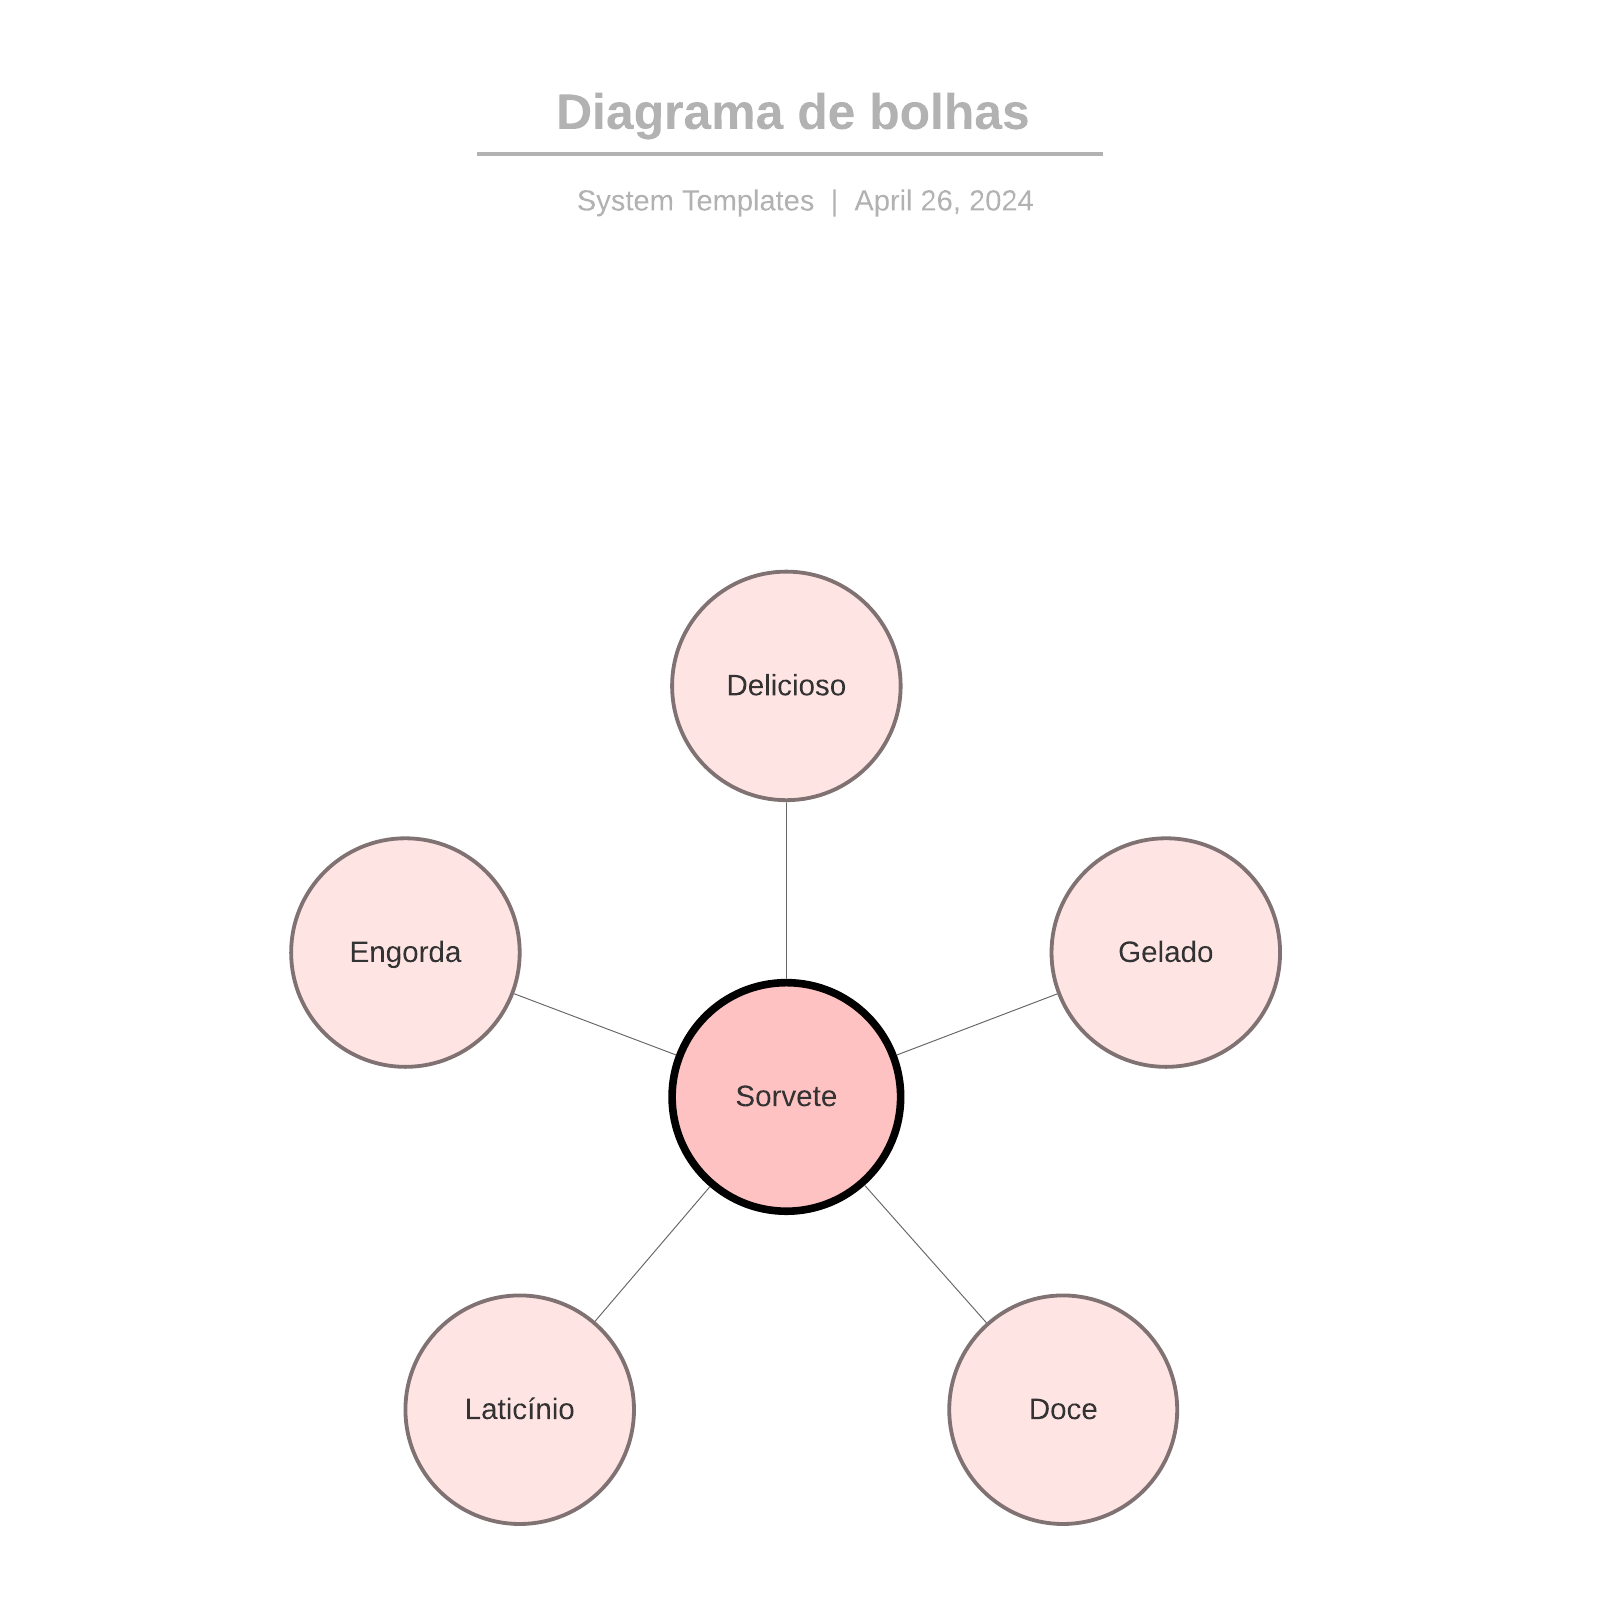 Diagrama de bolhas example